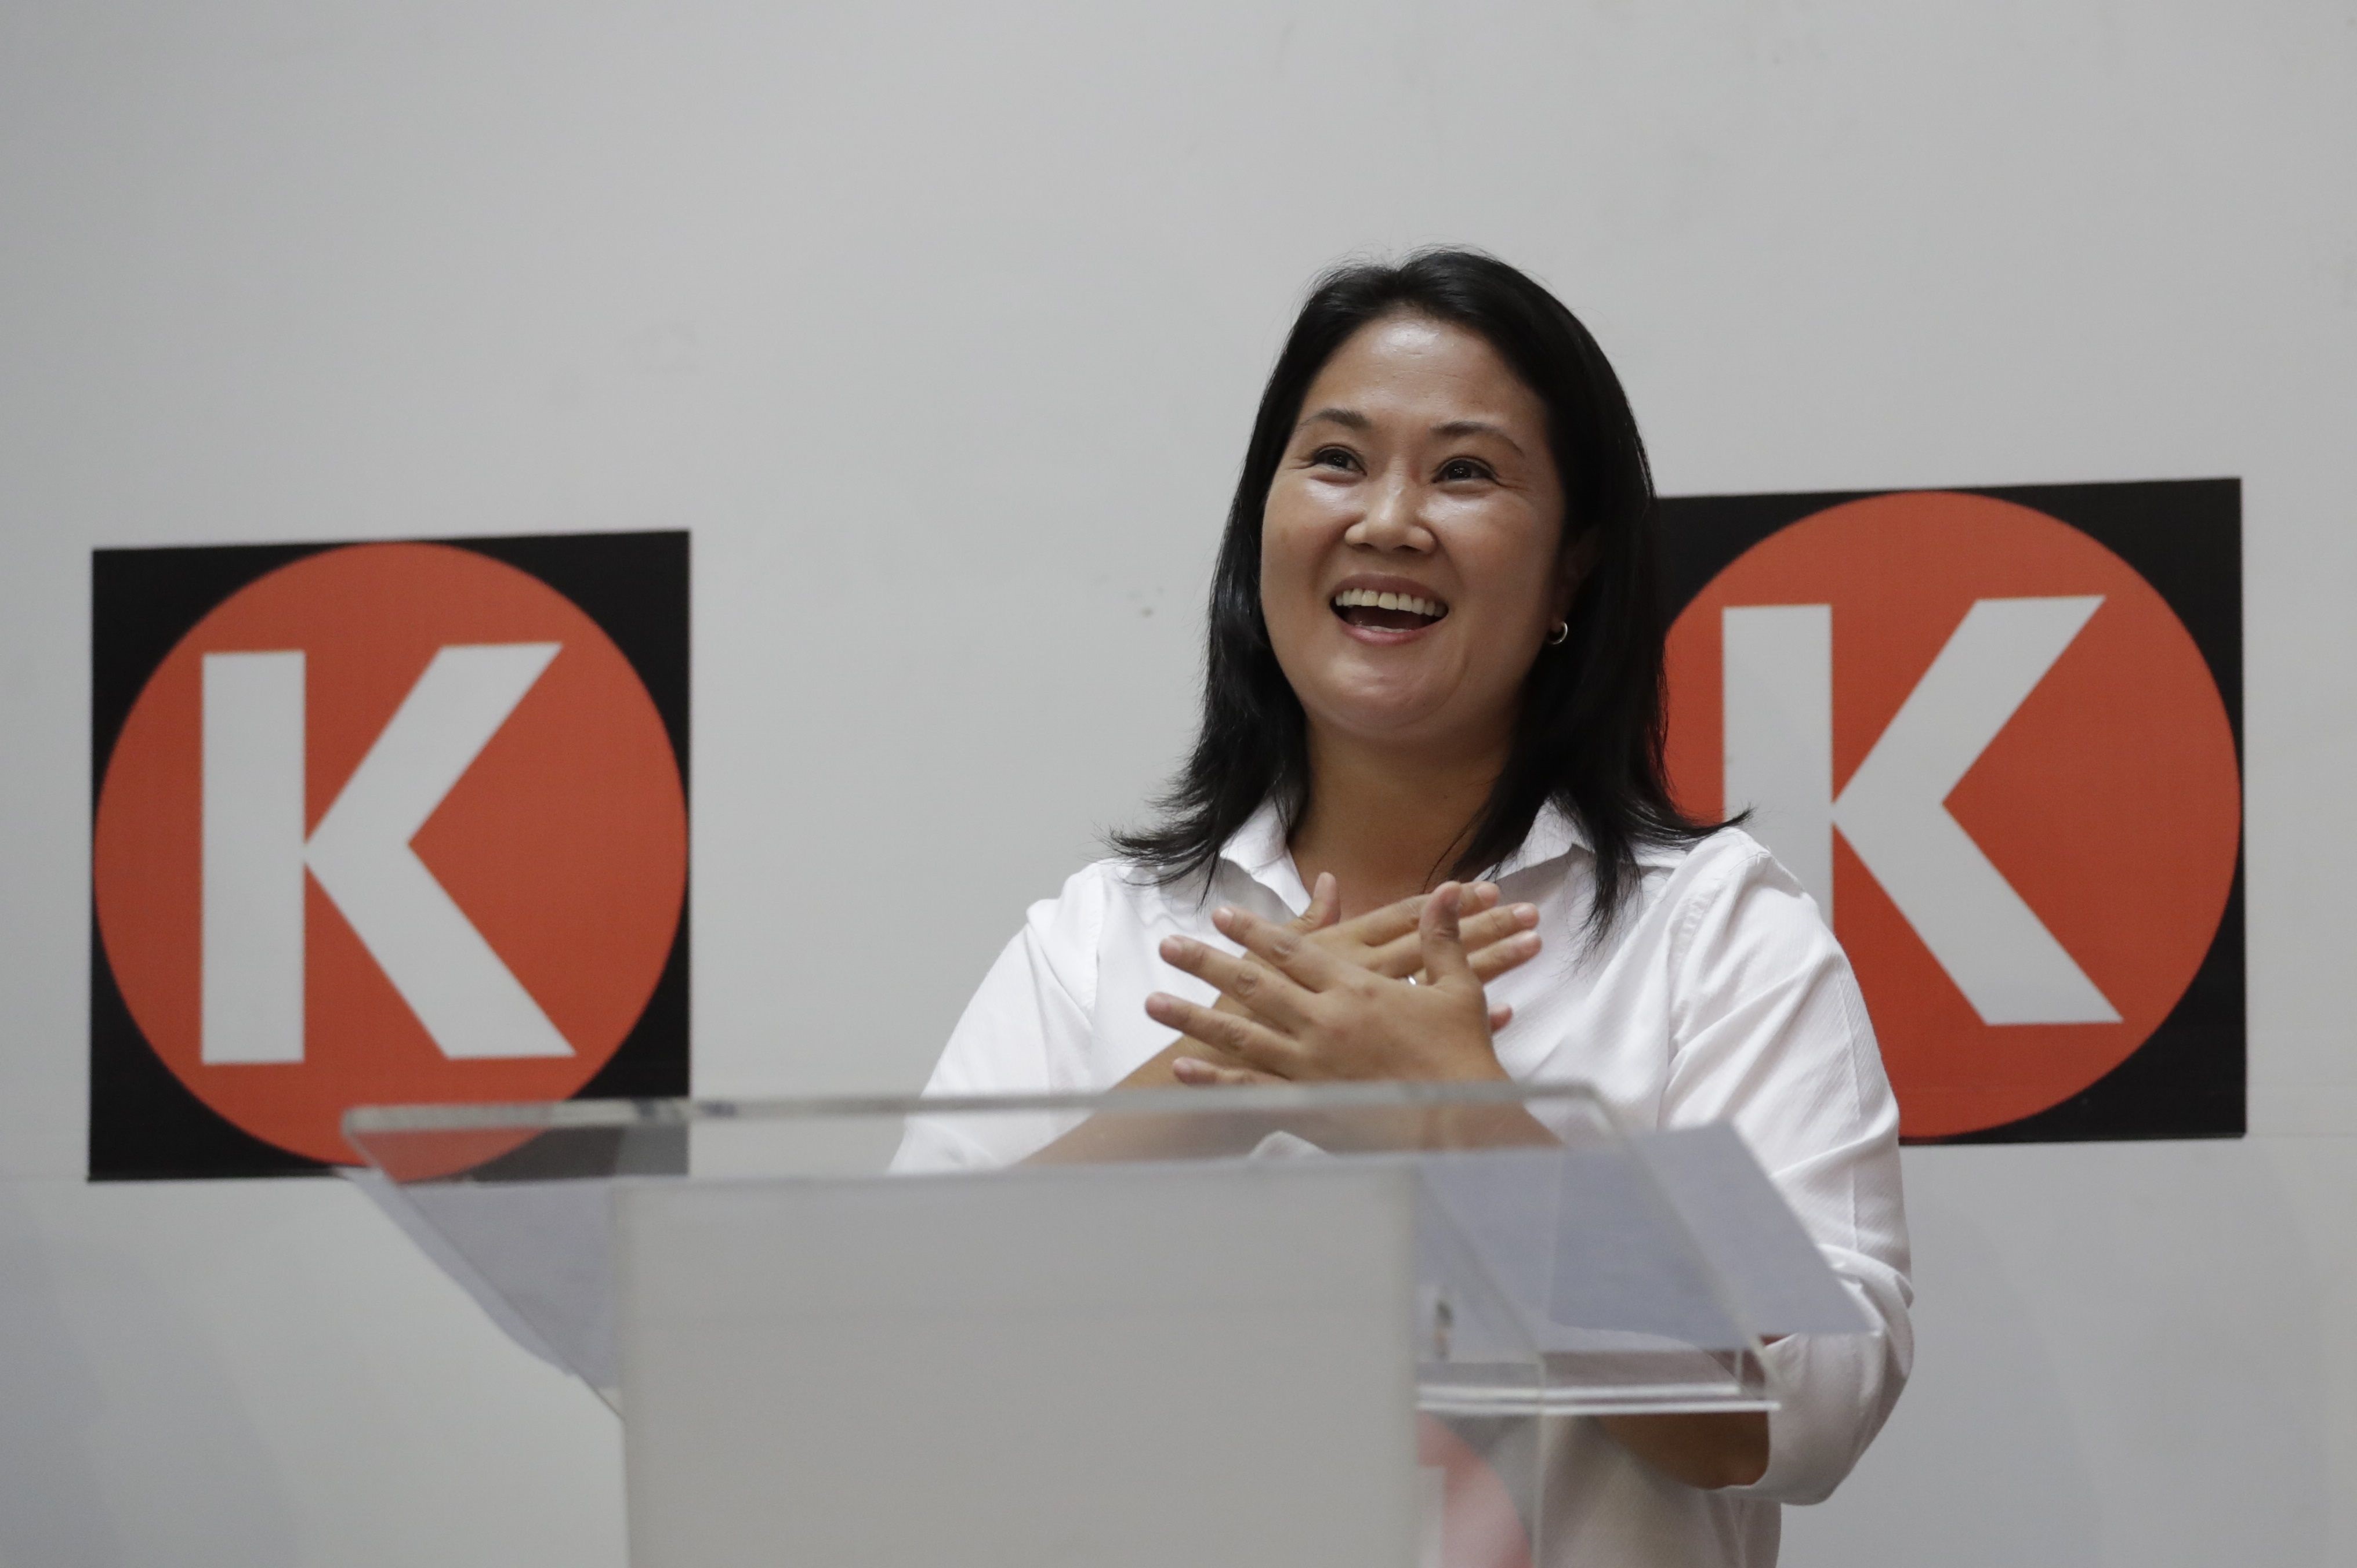 La candidata presidencial peruana Keiko Fujimori. EFE/ Paolo Aguilar/Archivo
